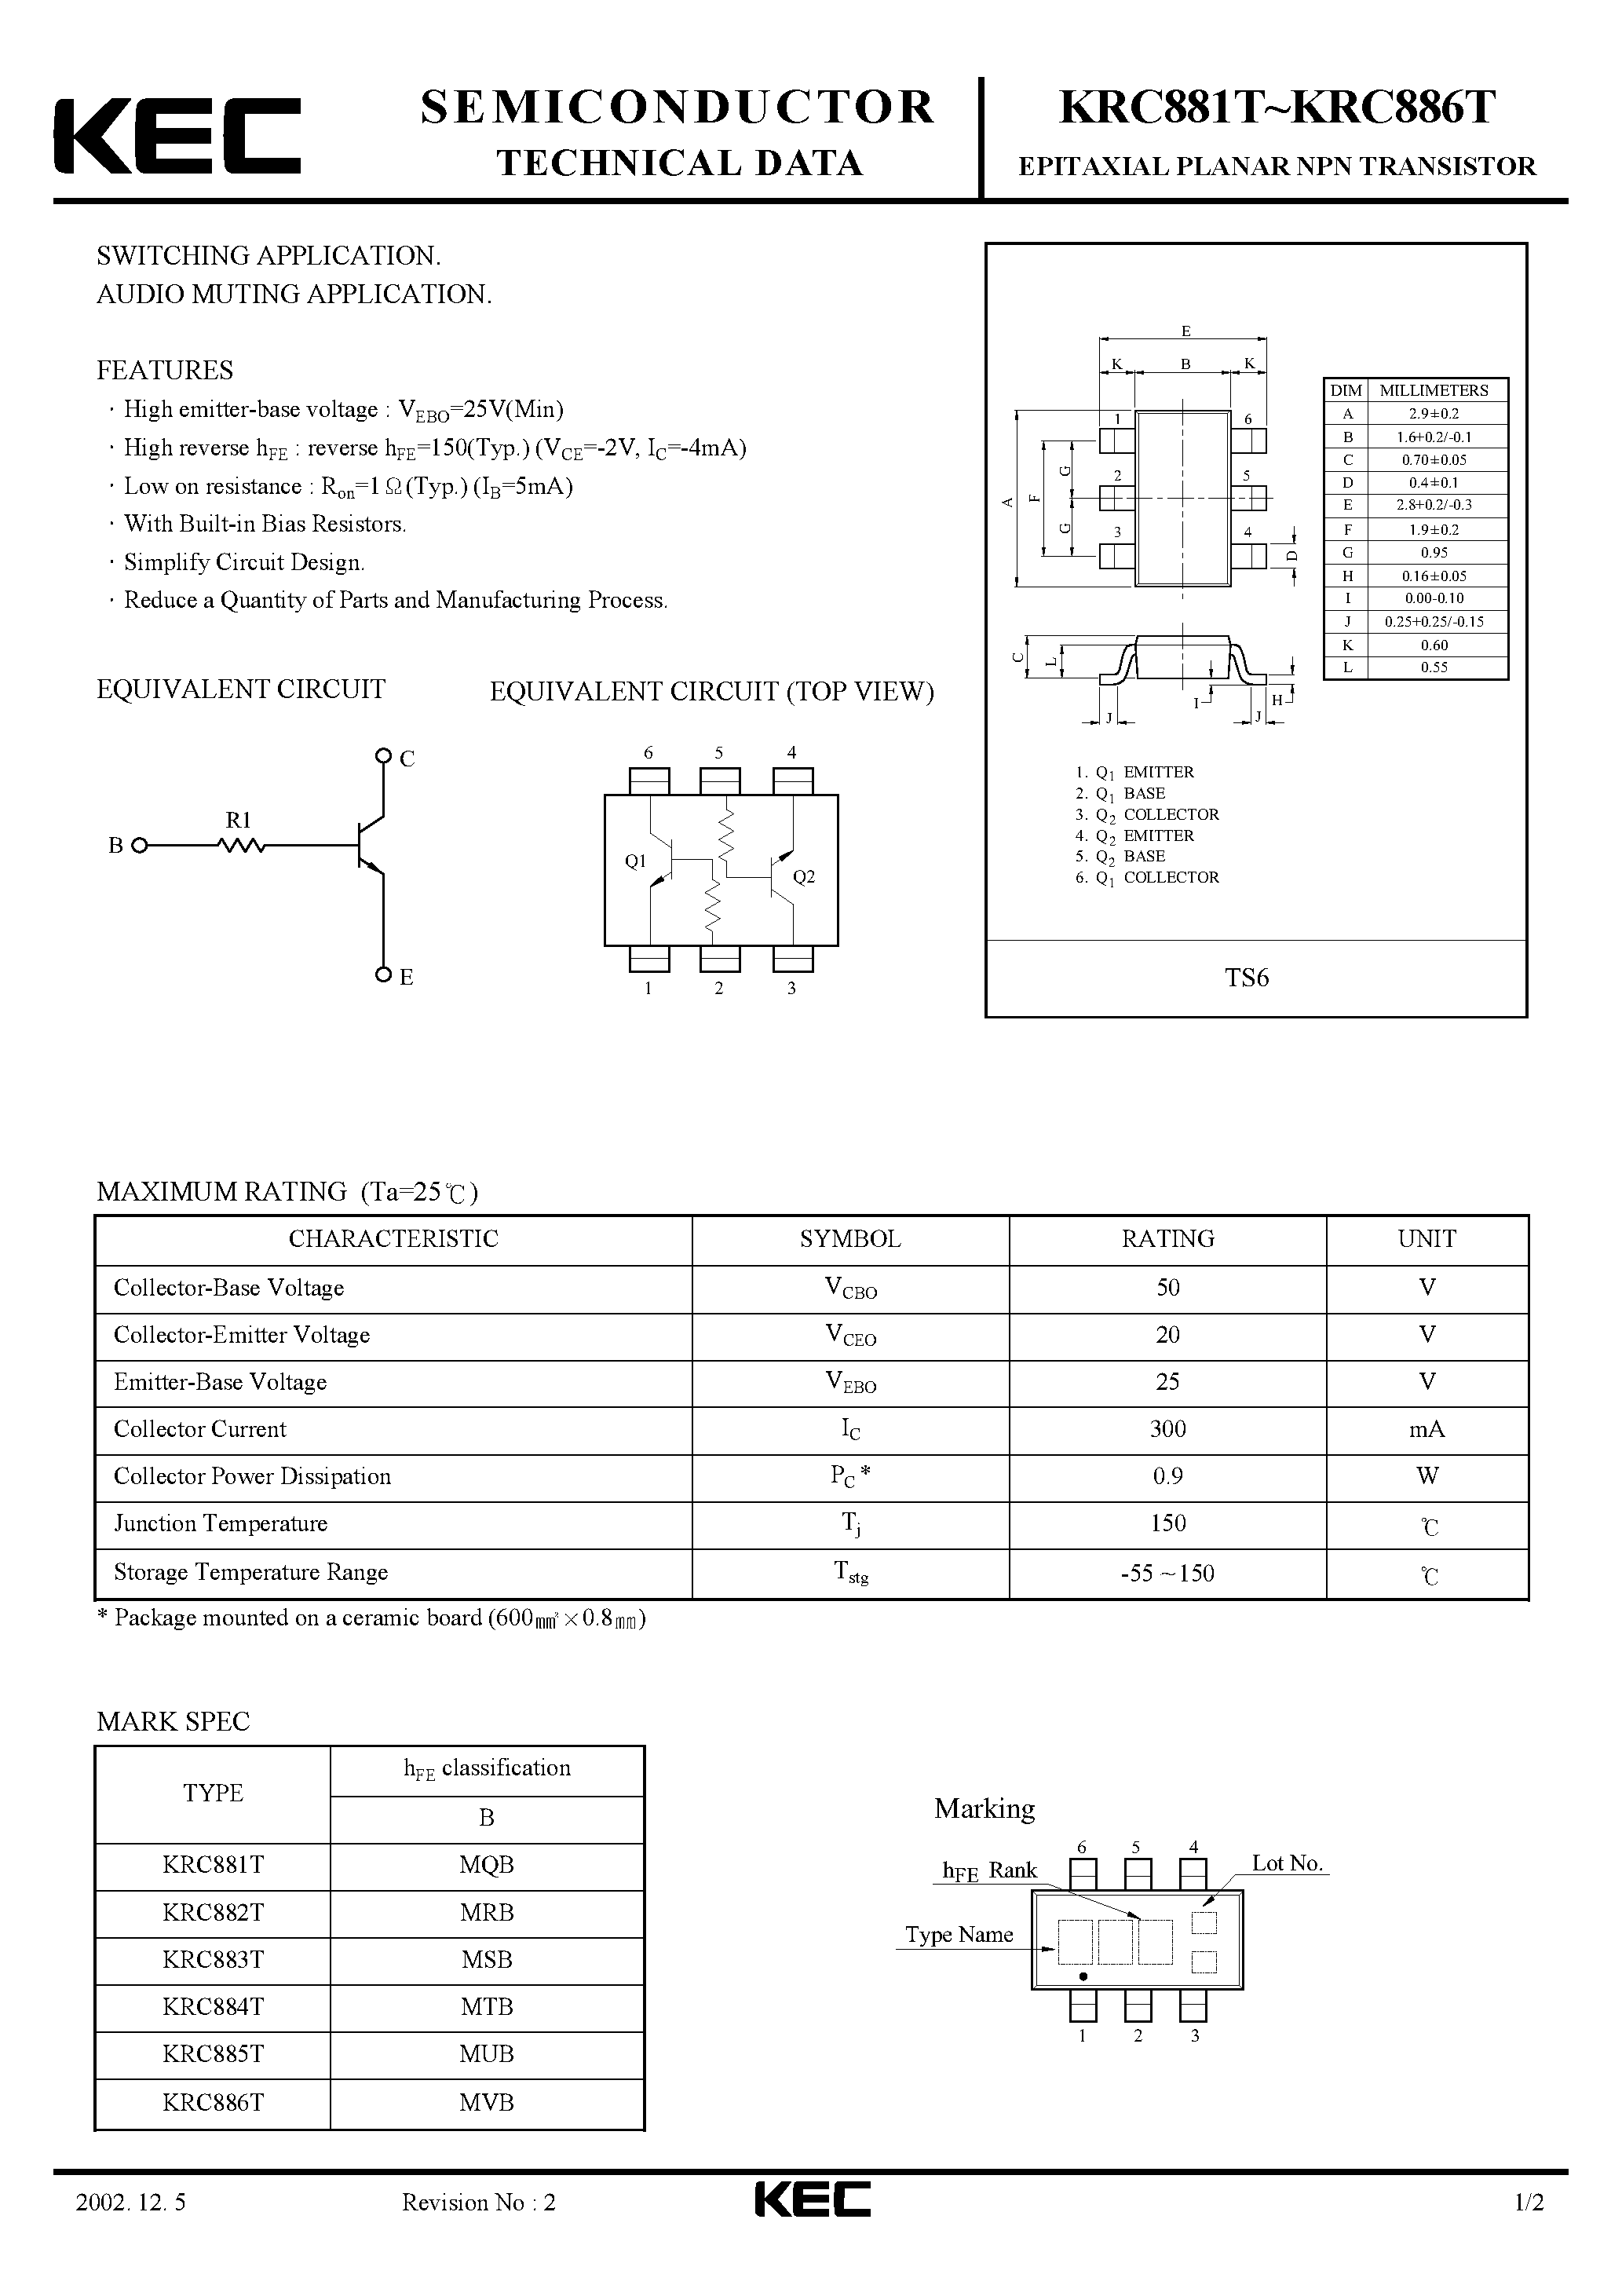 Datasheet KRC881T - (KRC881T - KRC886T) EPITAXIAL PLANAR NPN TRANSISTOR page 1